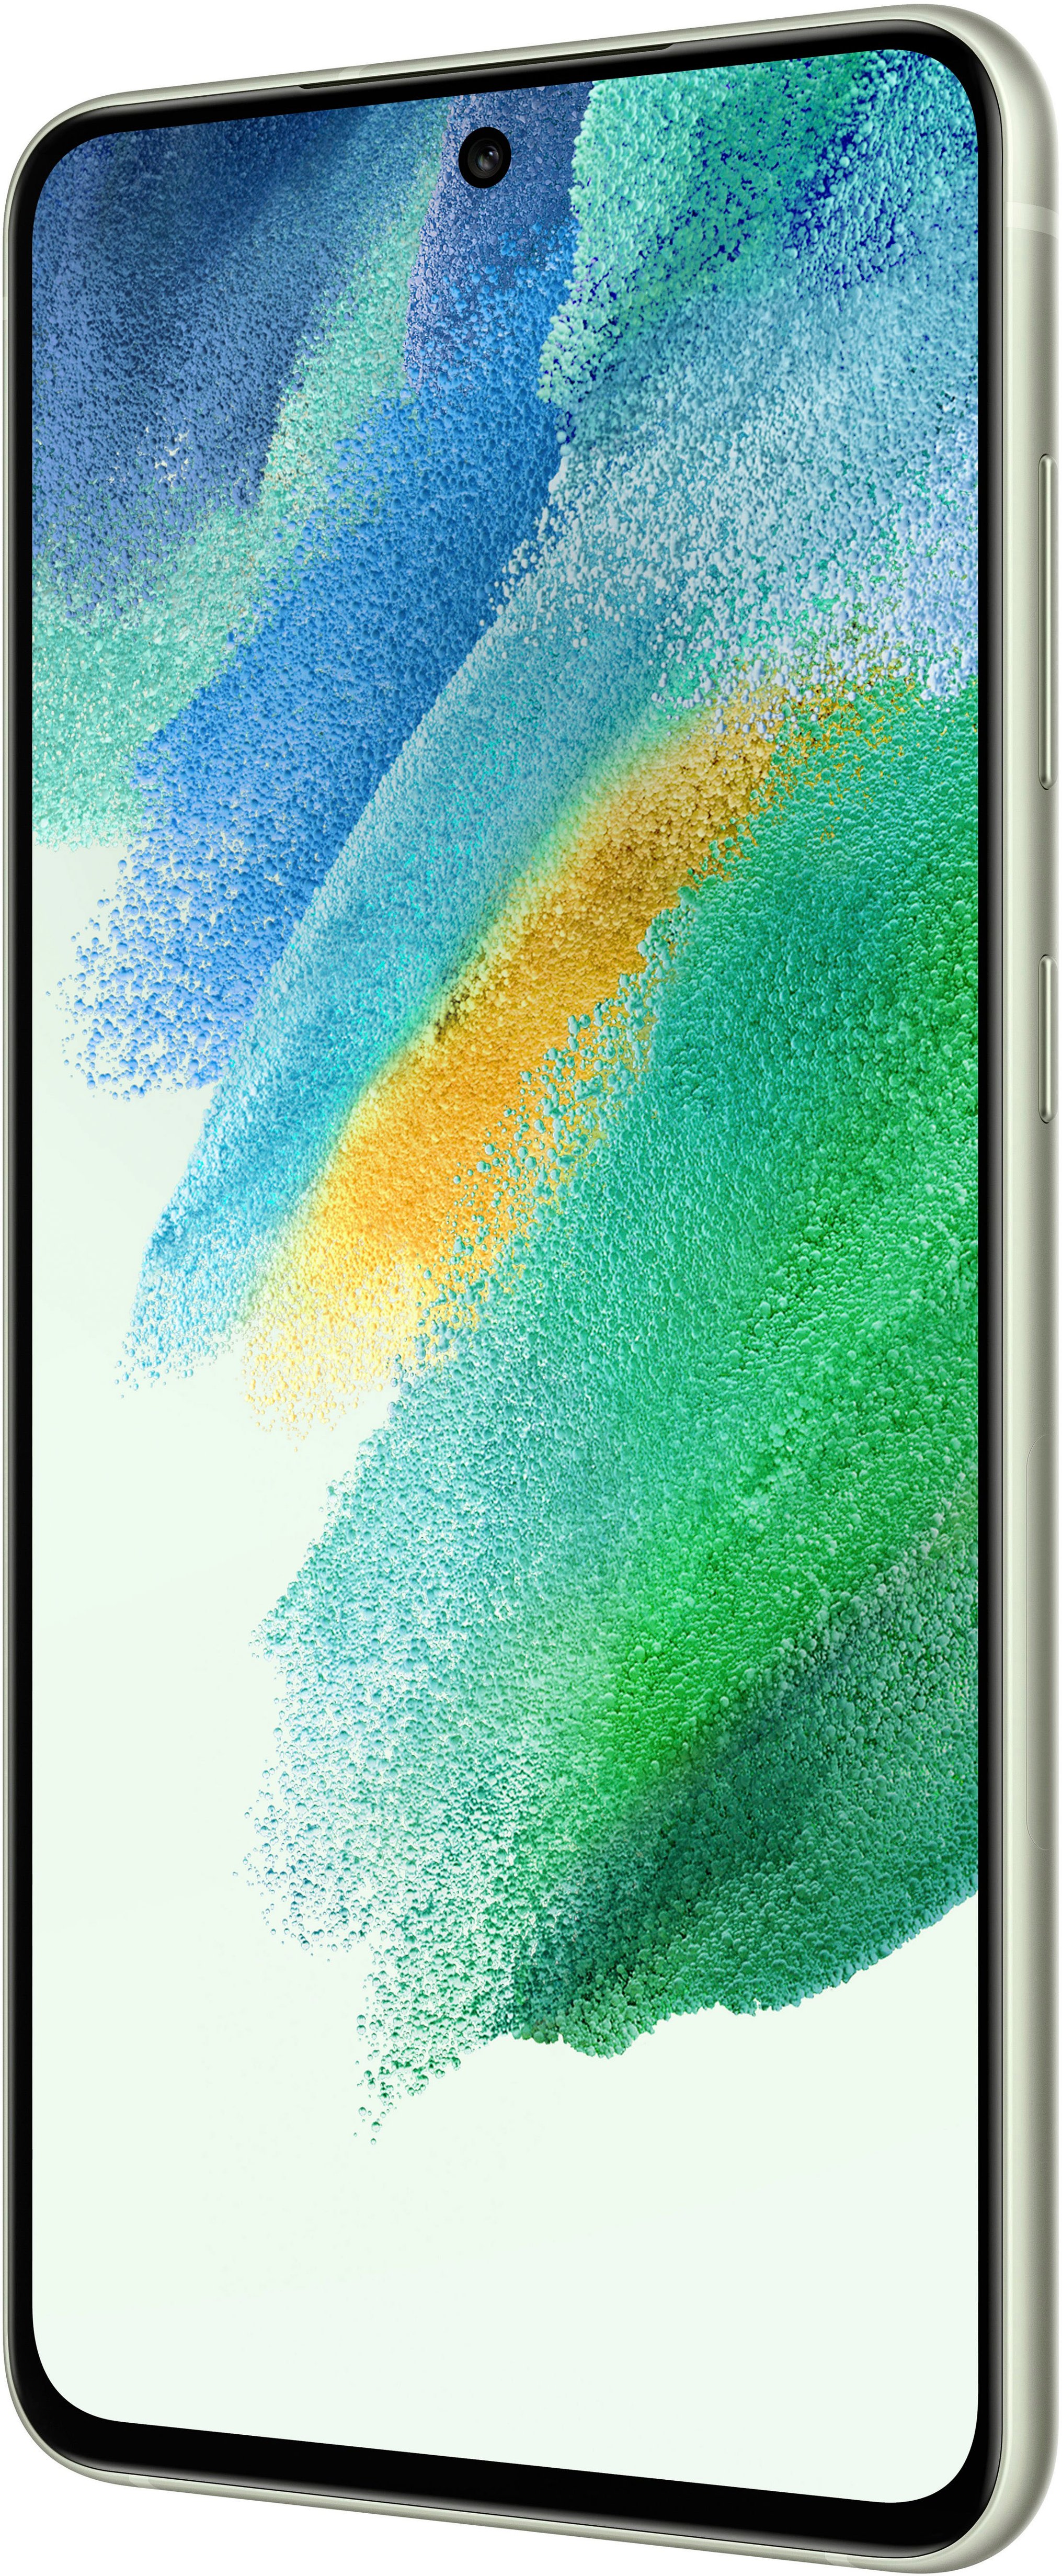 Samsung Galaxy S21 FE 5G 128GB (Unlocked) Navy SM-G990UZBDXAA - Best Buy